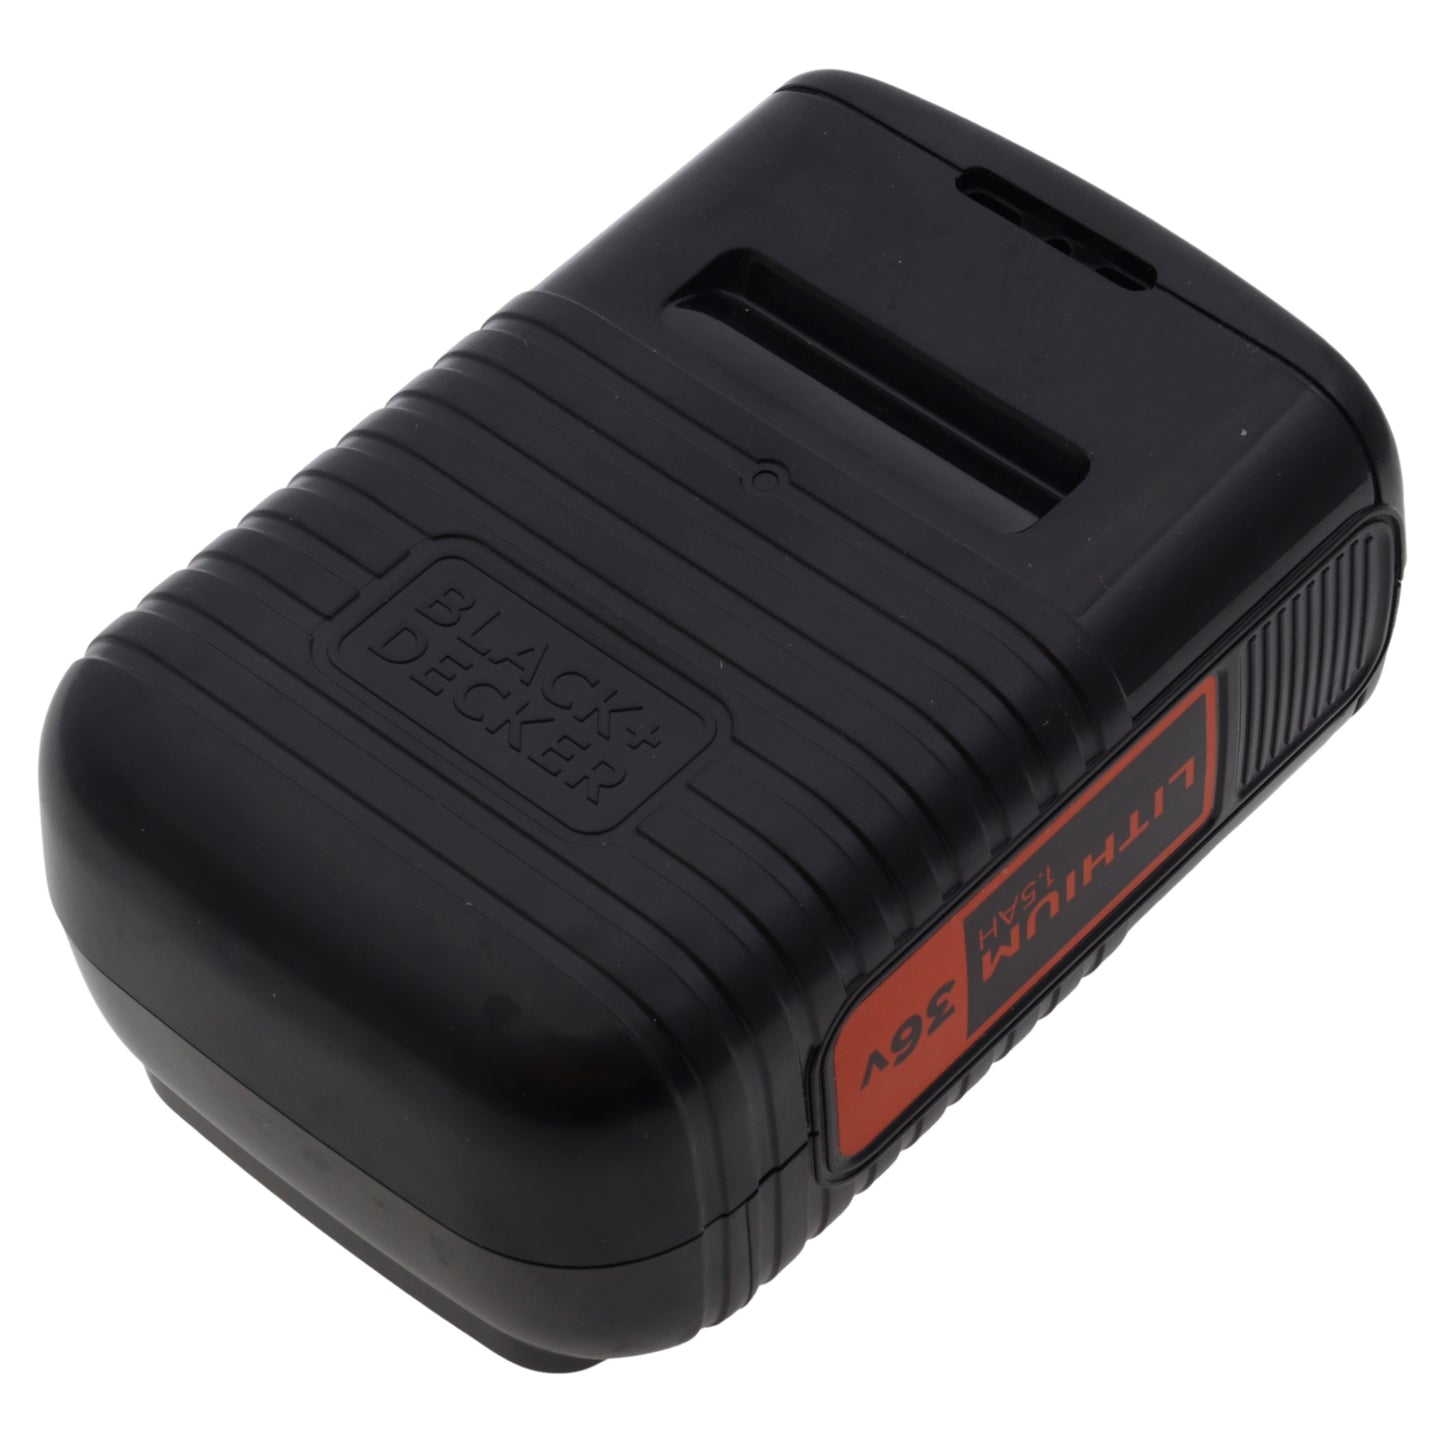 Black & Decker batteria BL15362 36V scopa aspirapolvere PowerSeries Extreme 36V